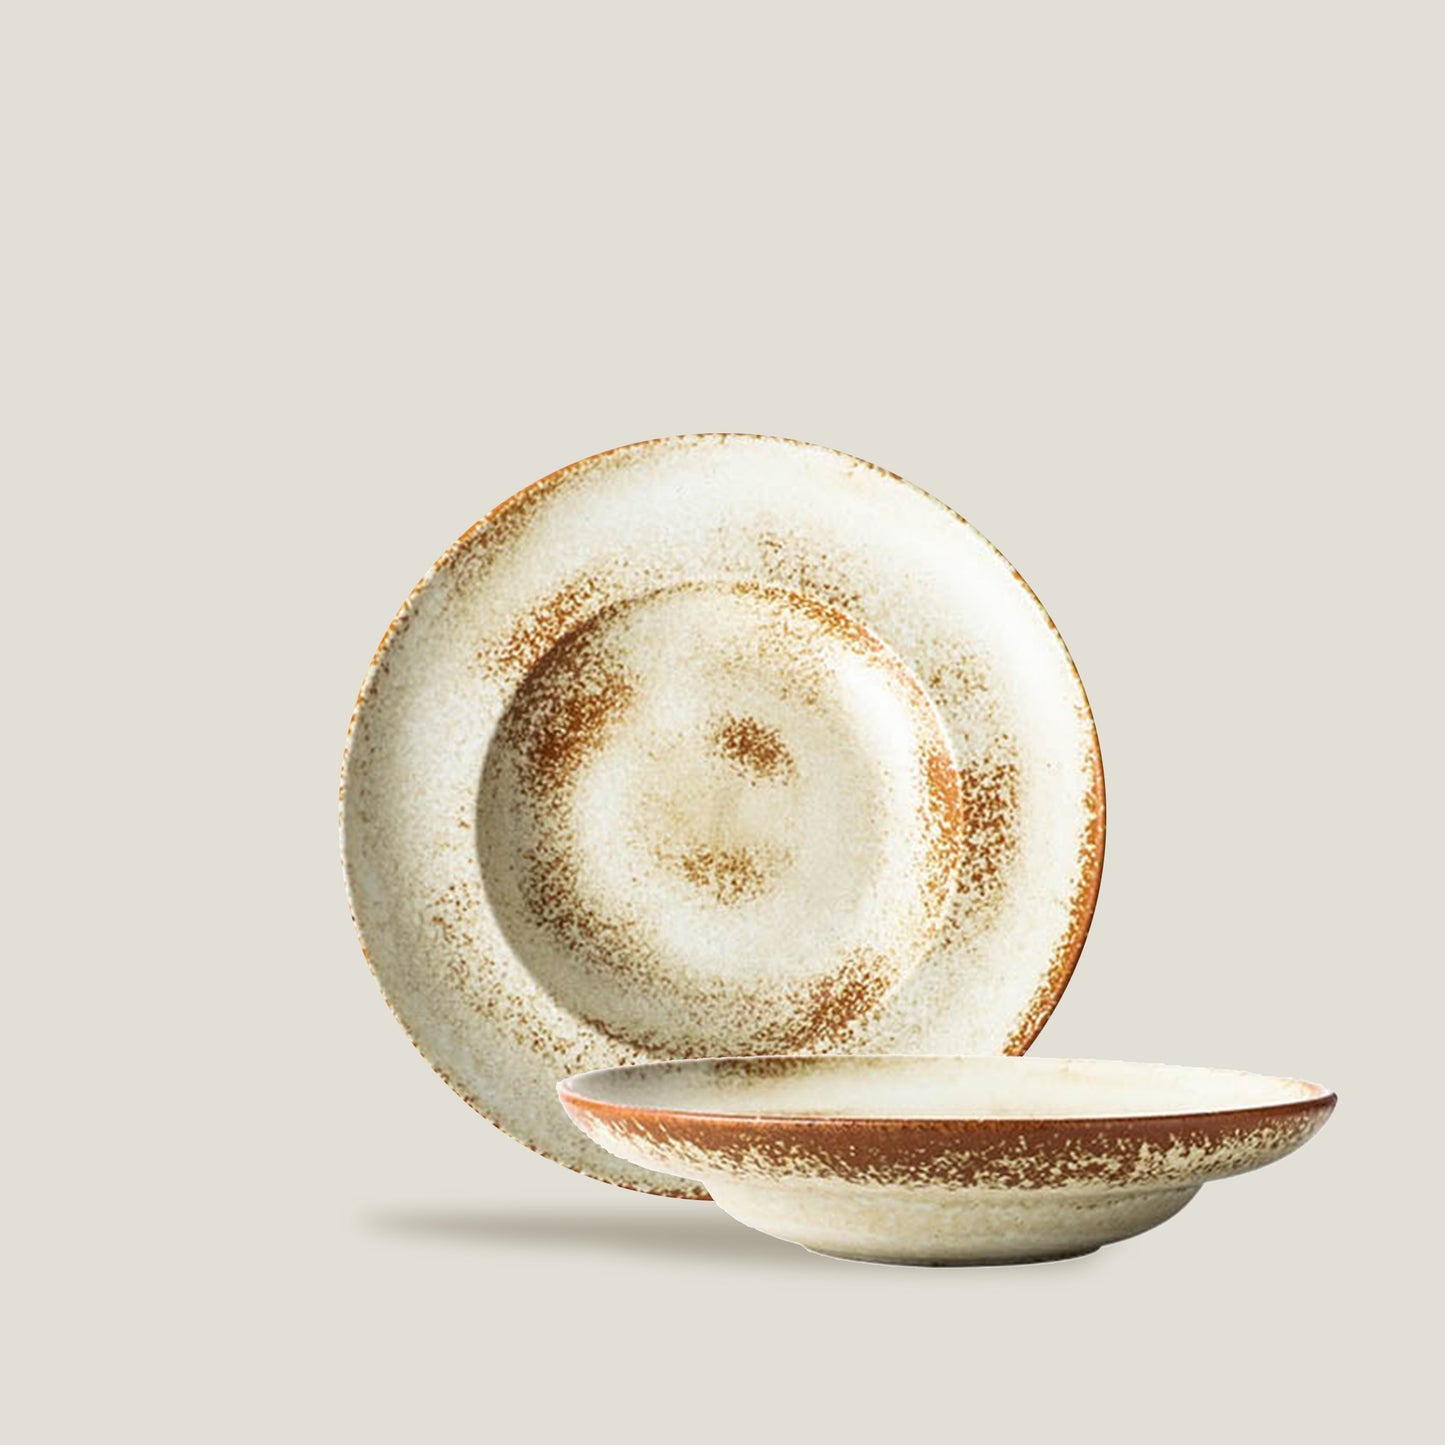 Sand White Ceramics Pasta Plates